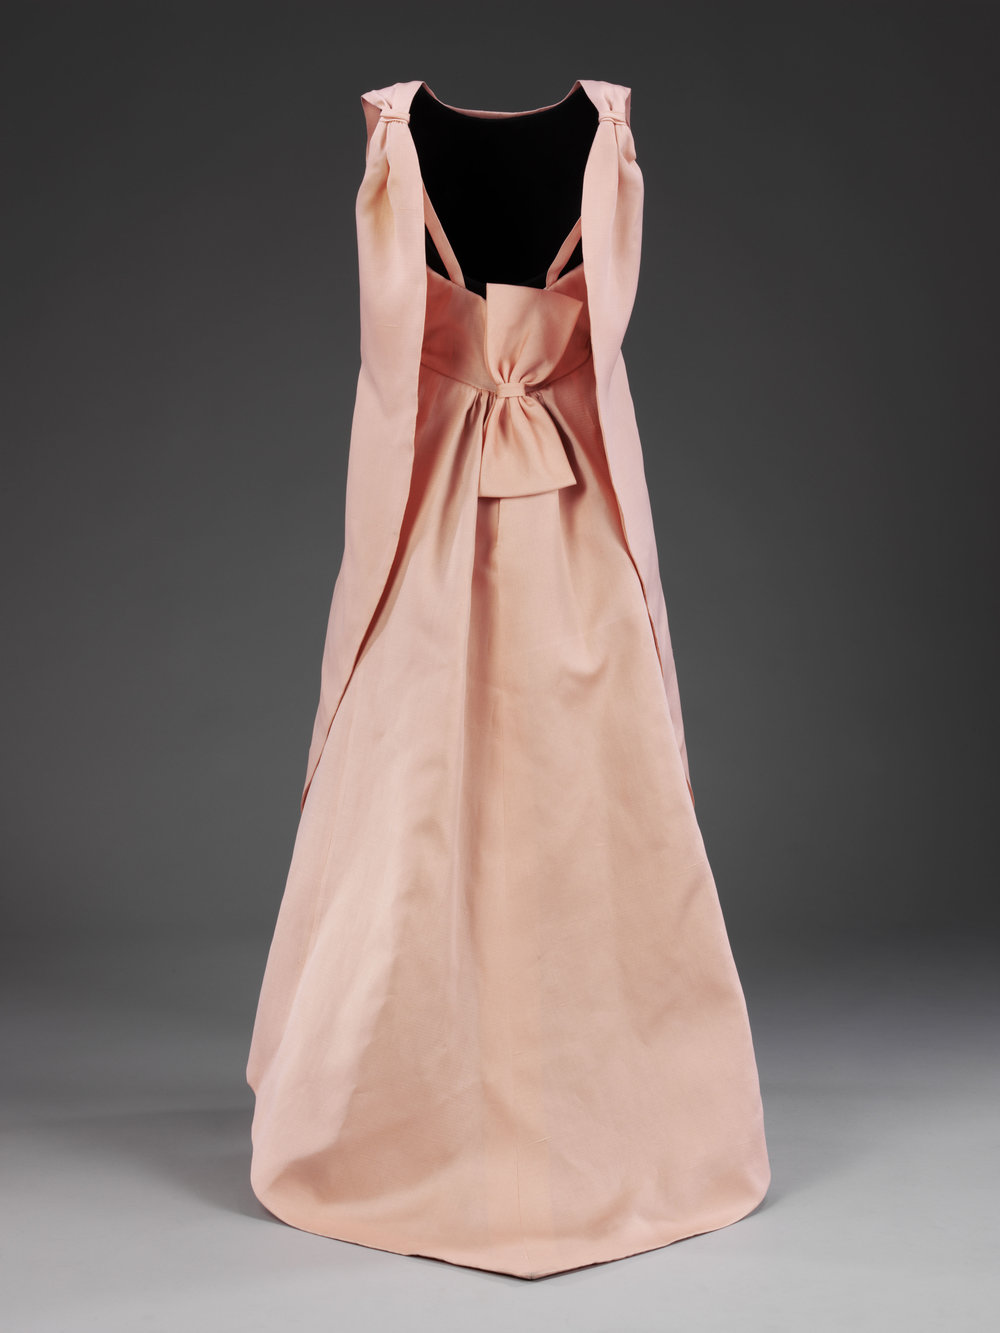  La Tulipe Evening Dress,&nbsp;Balenciaga for EISA,&nbsp;Spain,&nbsp;1965,&nbsp;© Victoria and Albert Museum, London. 